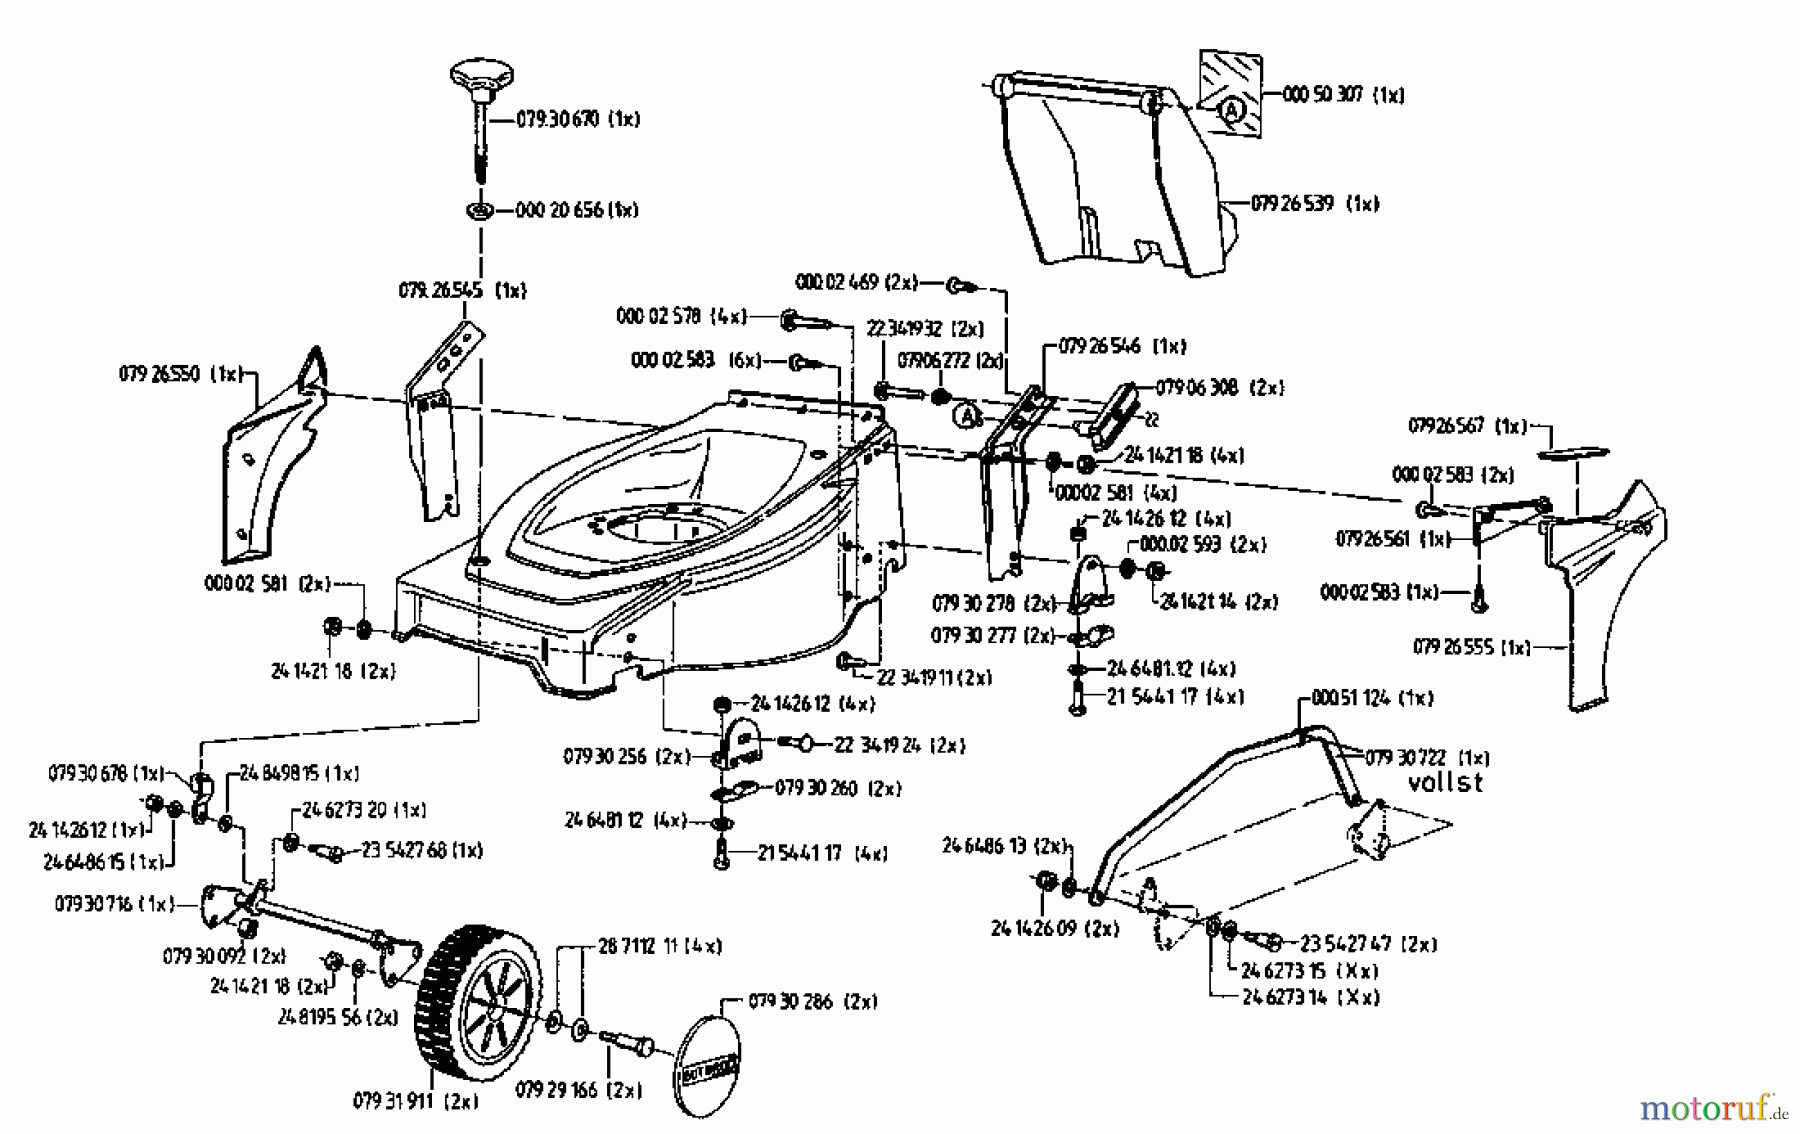  Gutbrod Motormäher mit Antrieb HB 42 RL 04029.01  (1996) Grundgerät